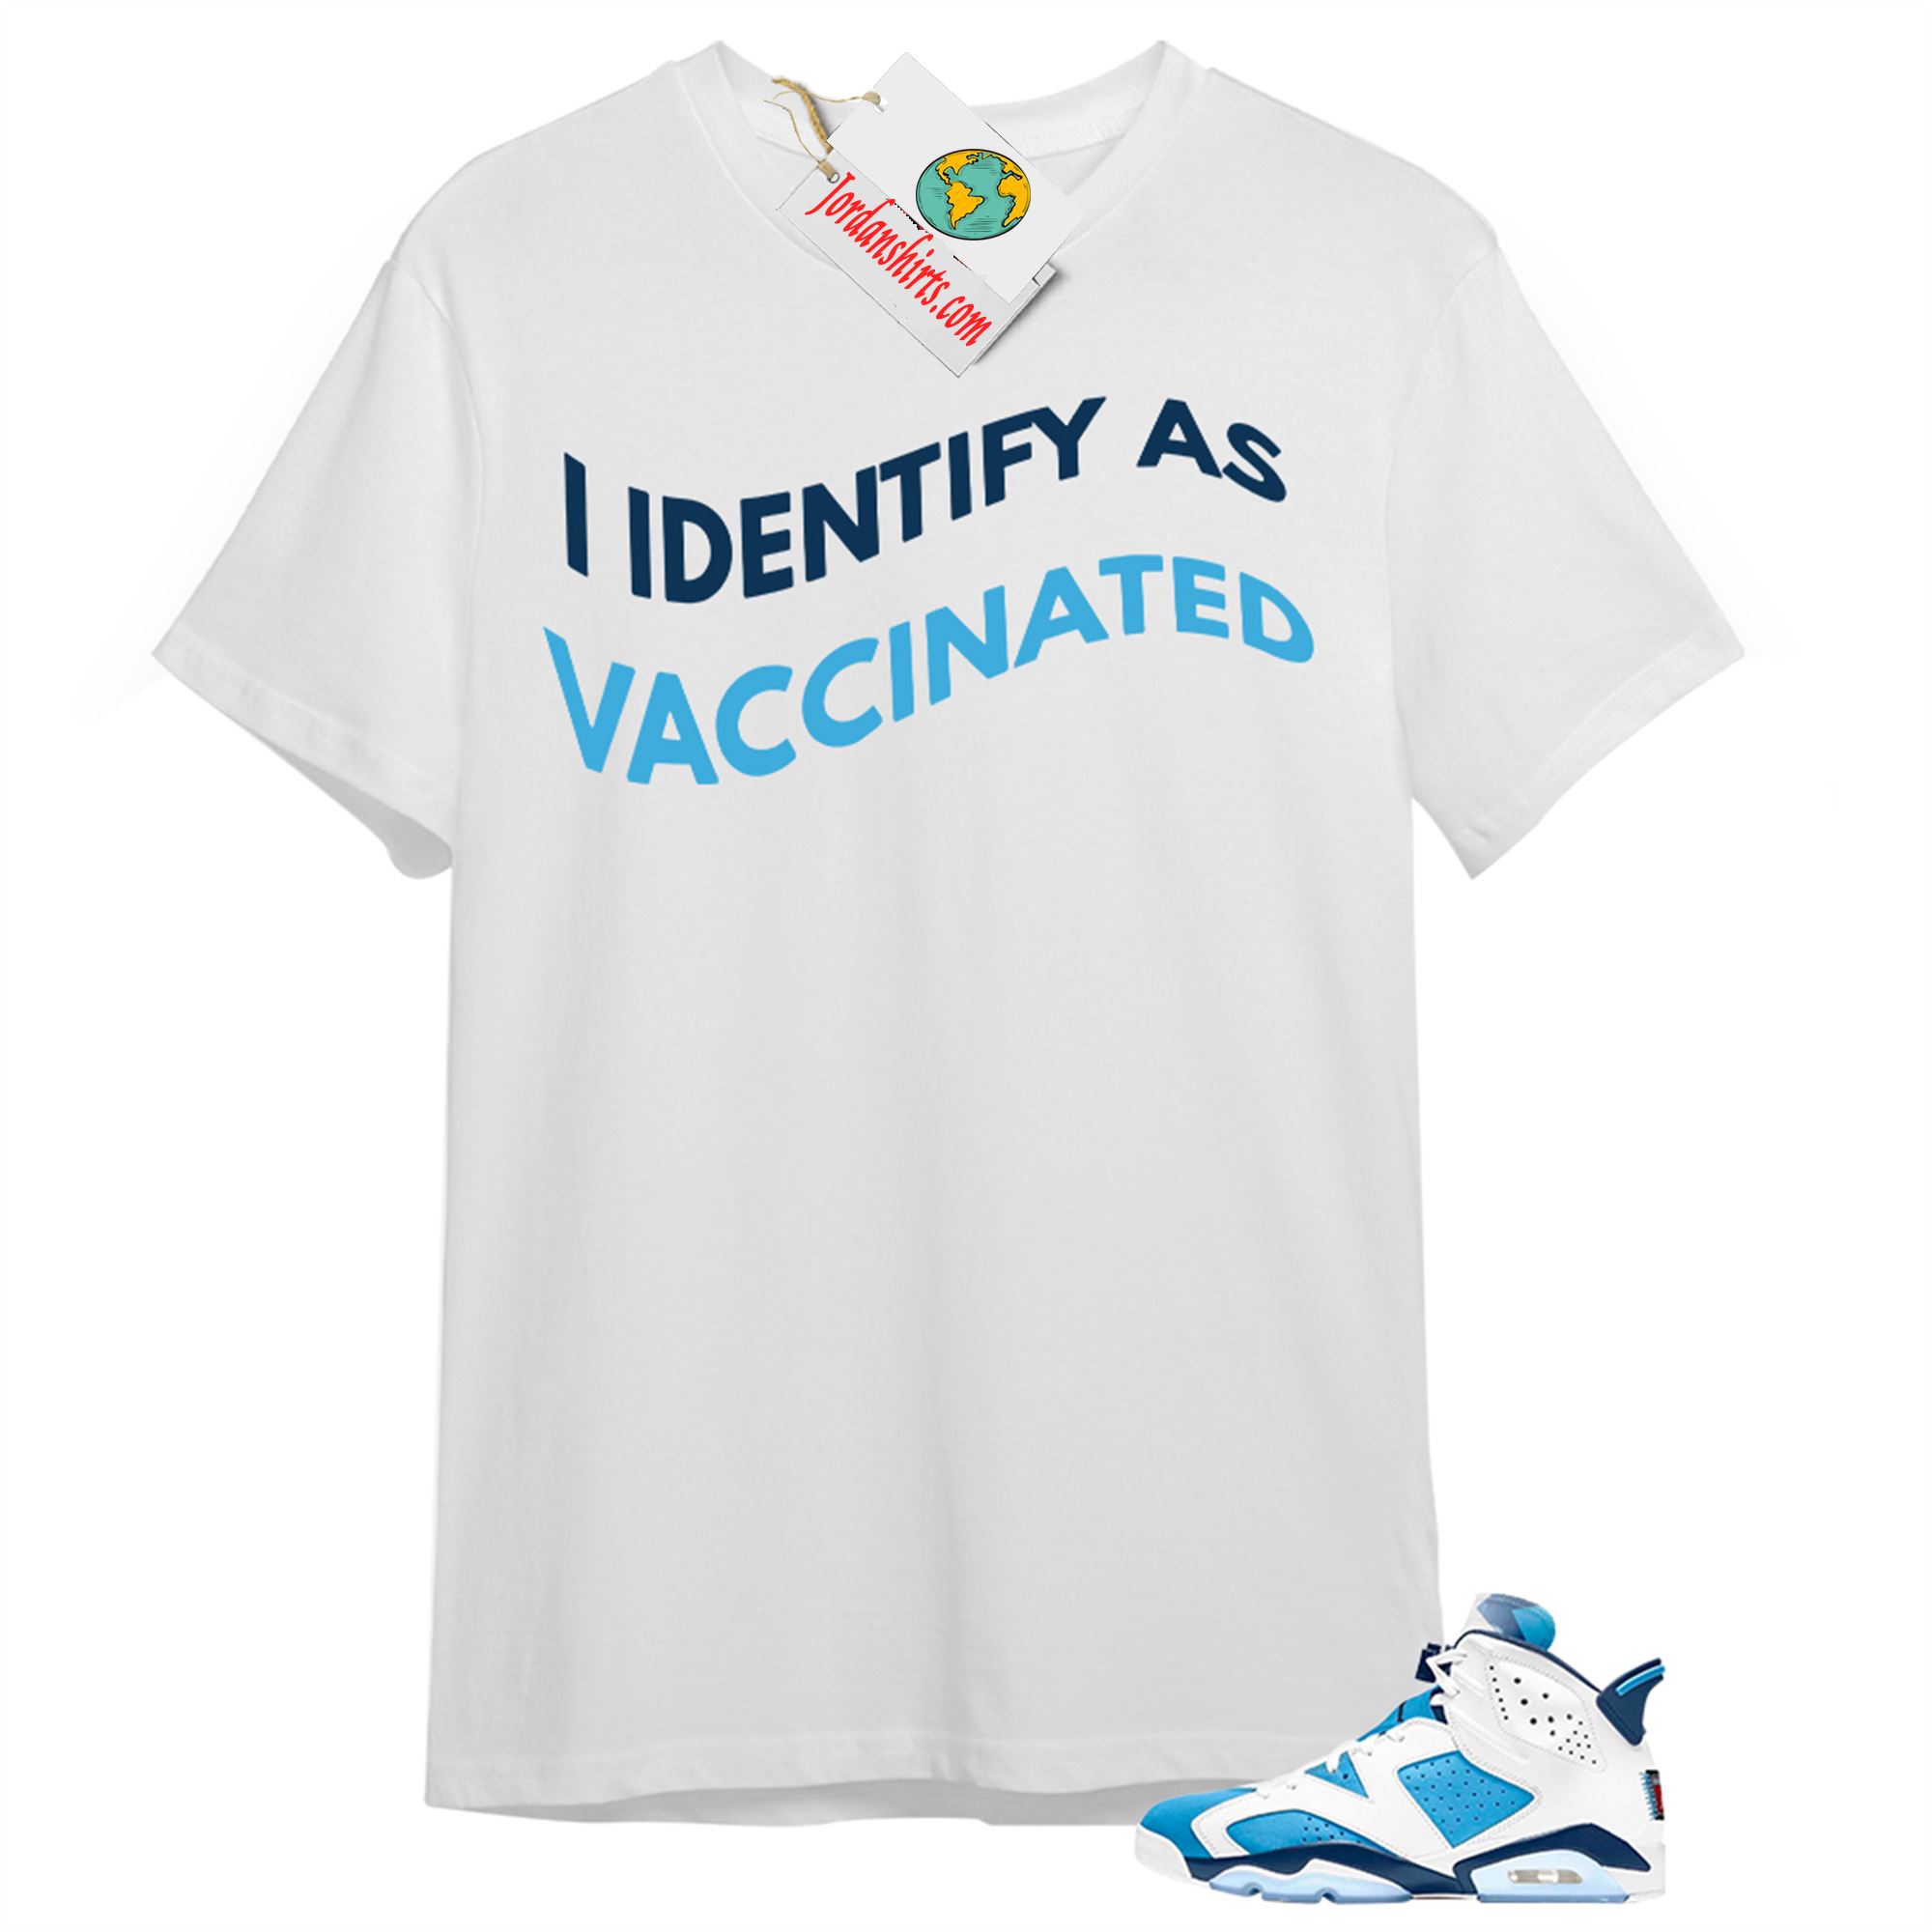 Jordan 6 Shirt, I Identify As Vaccinated White T-shirt Air Jordan 6 Unc 6s Full Size Up To 5xl